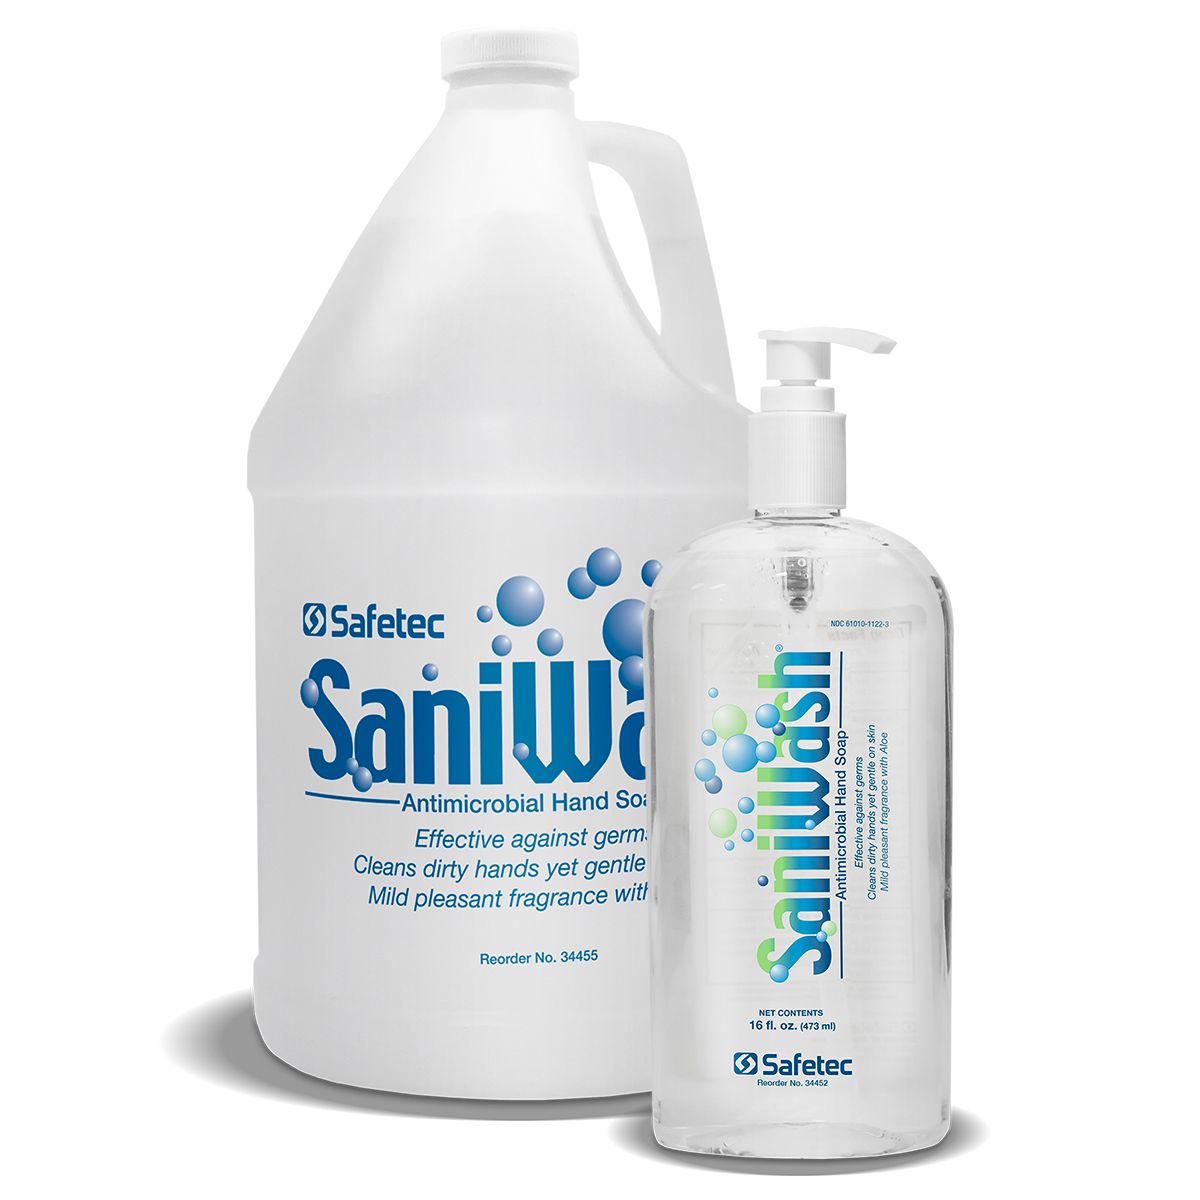 34452和34455 Safetec®SaniWash®抗菌洗手皂(16oz和1加仑)